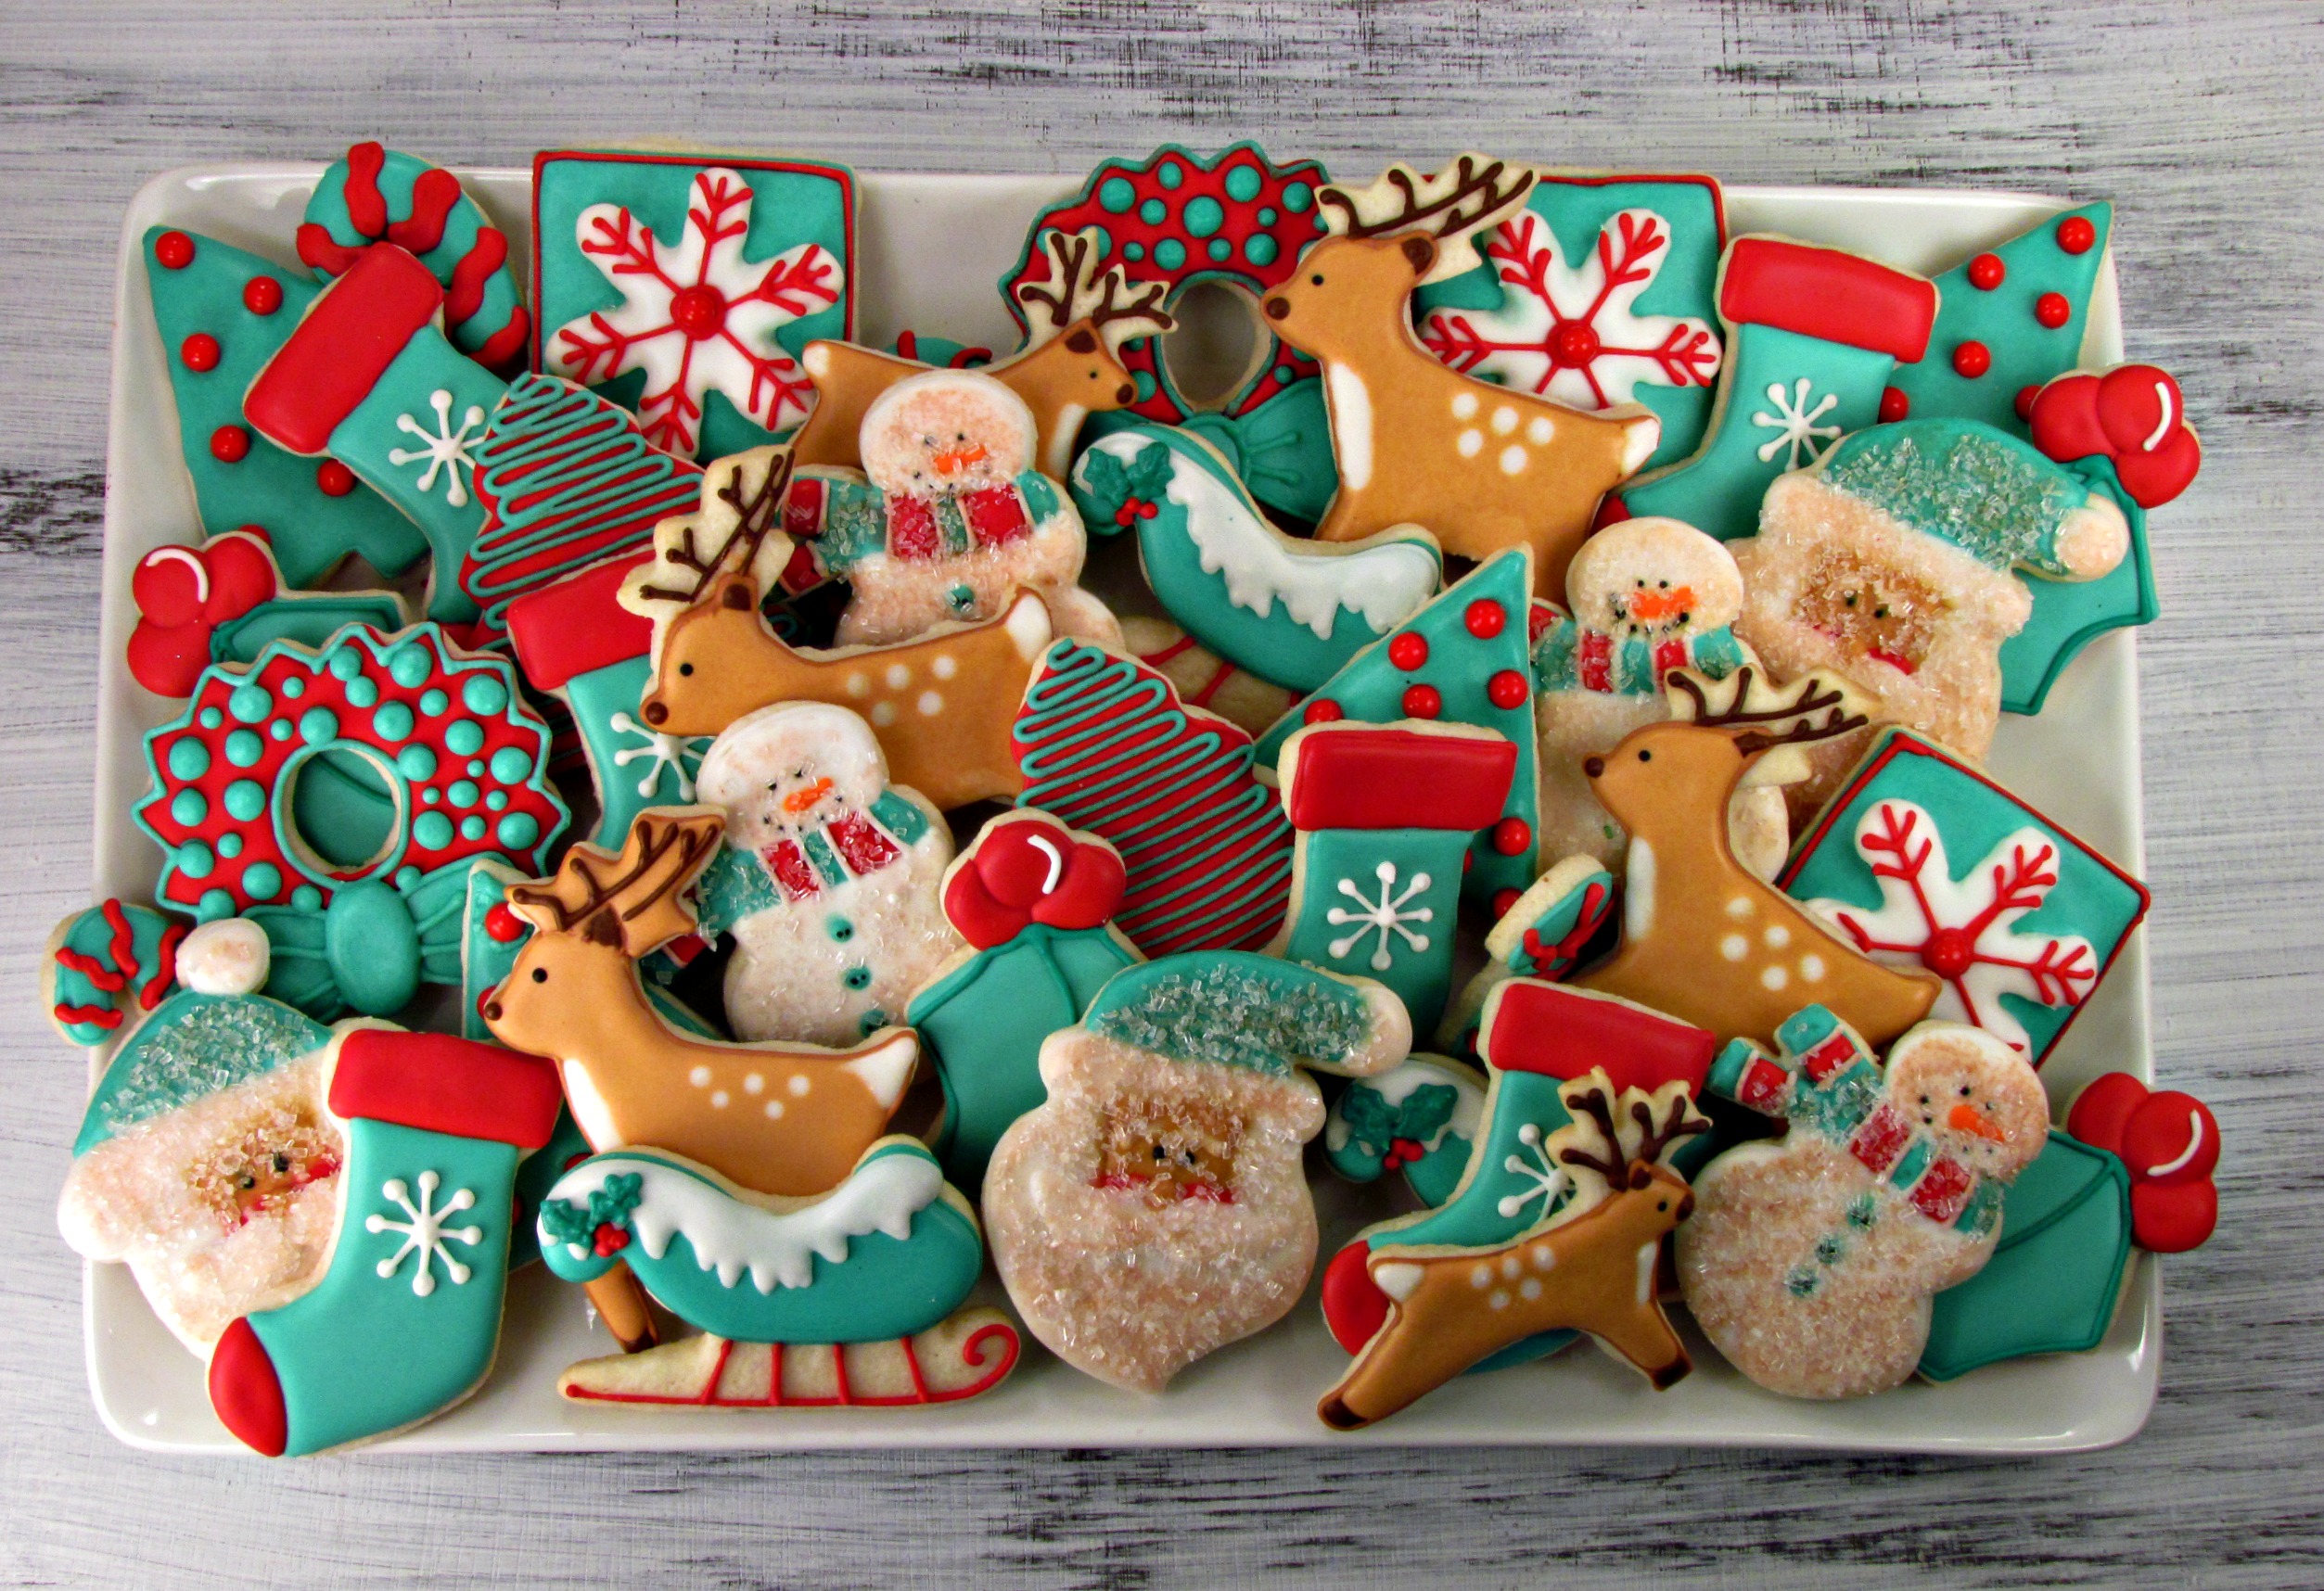 Simple Christmas Cookies-My Holiday Helpers! | The Bearfoot Baker